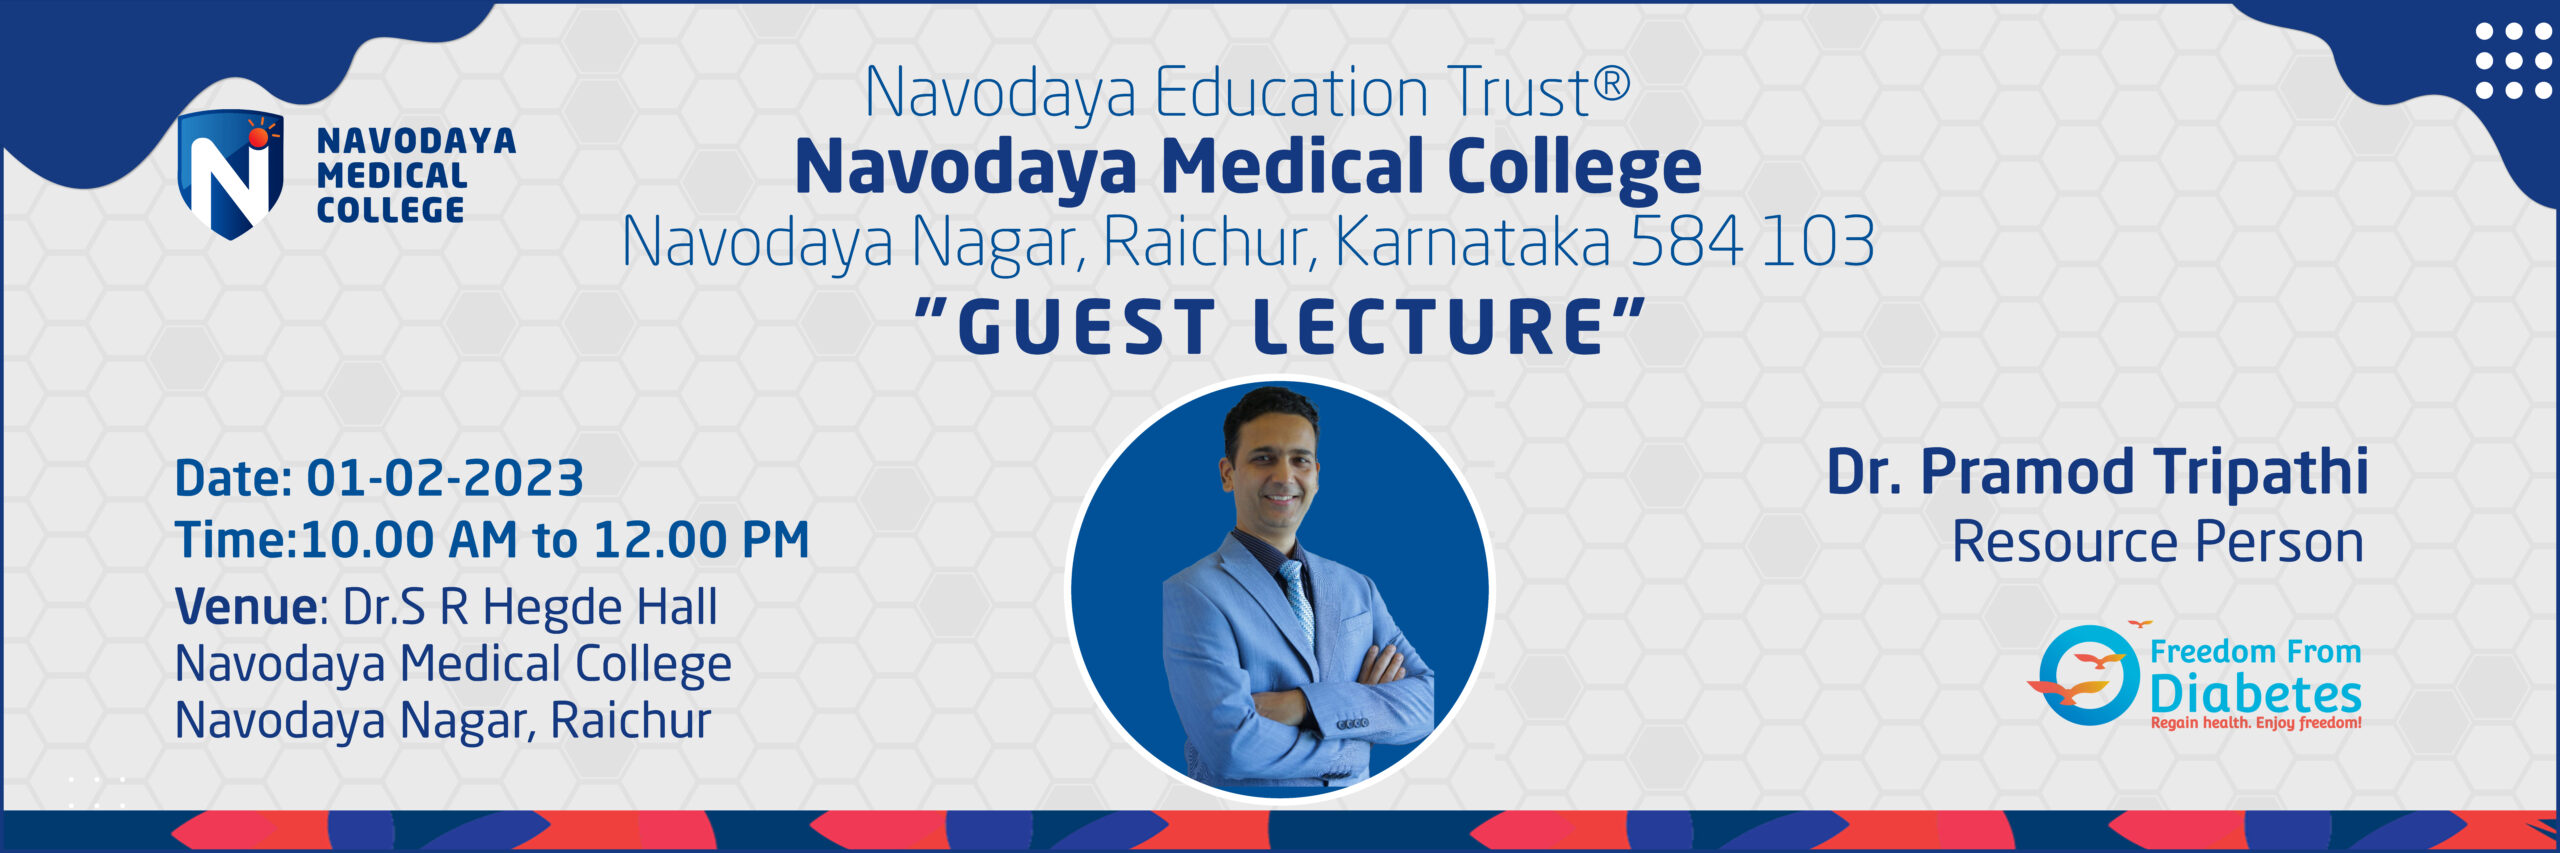 “Guest Lecture on 01st Feb 2023 by Dr. Pramod Tripathi” organized by Navodaya Medical College, Raichur